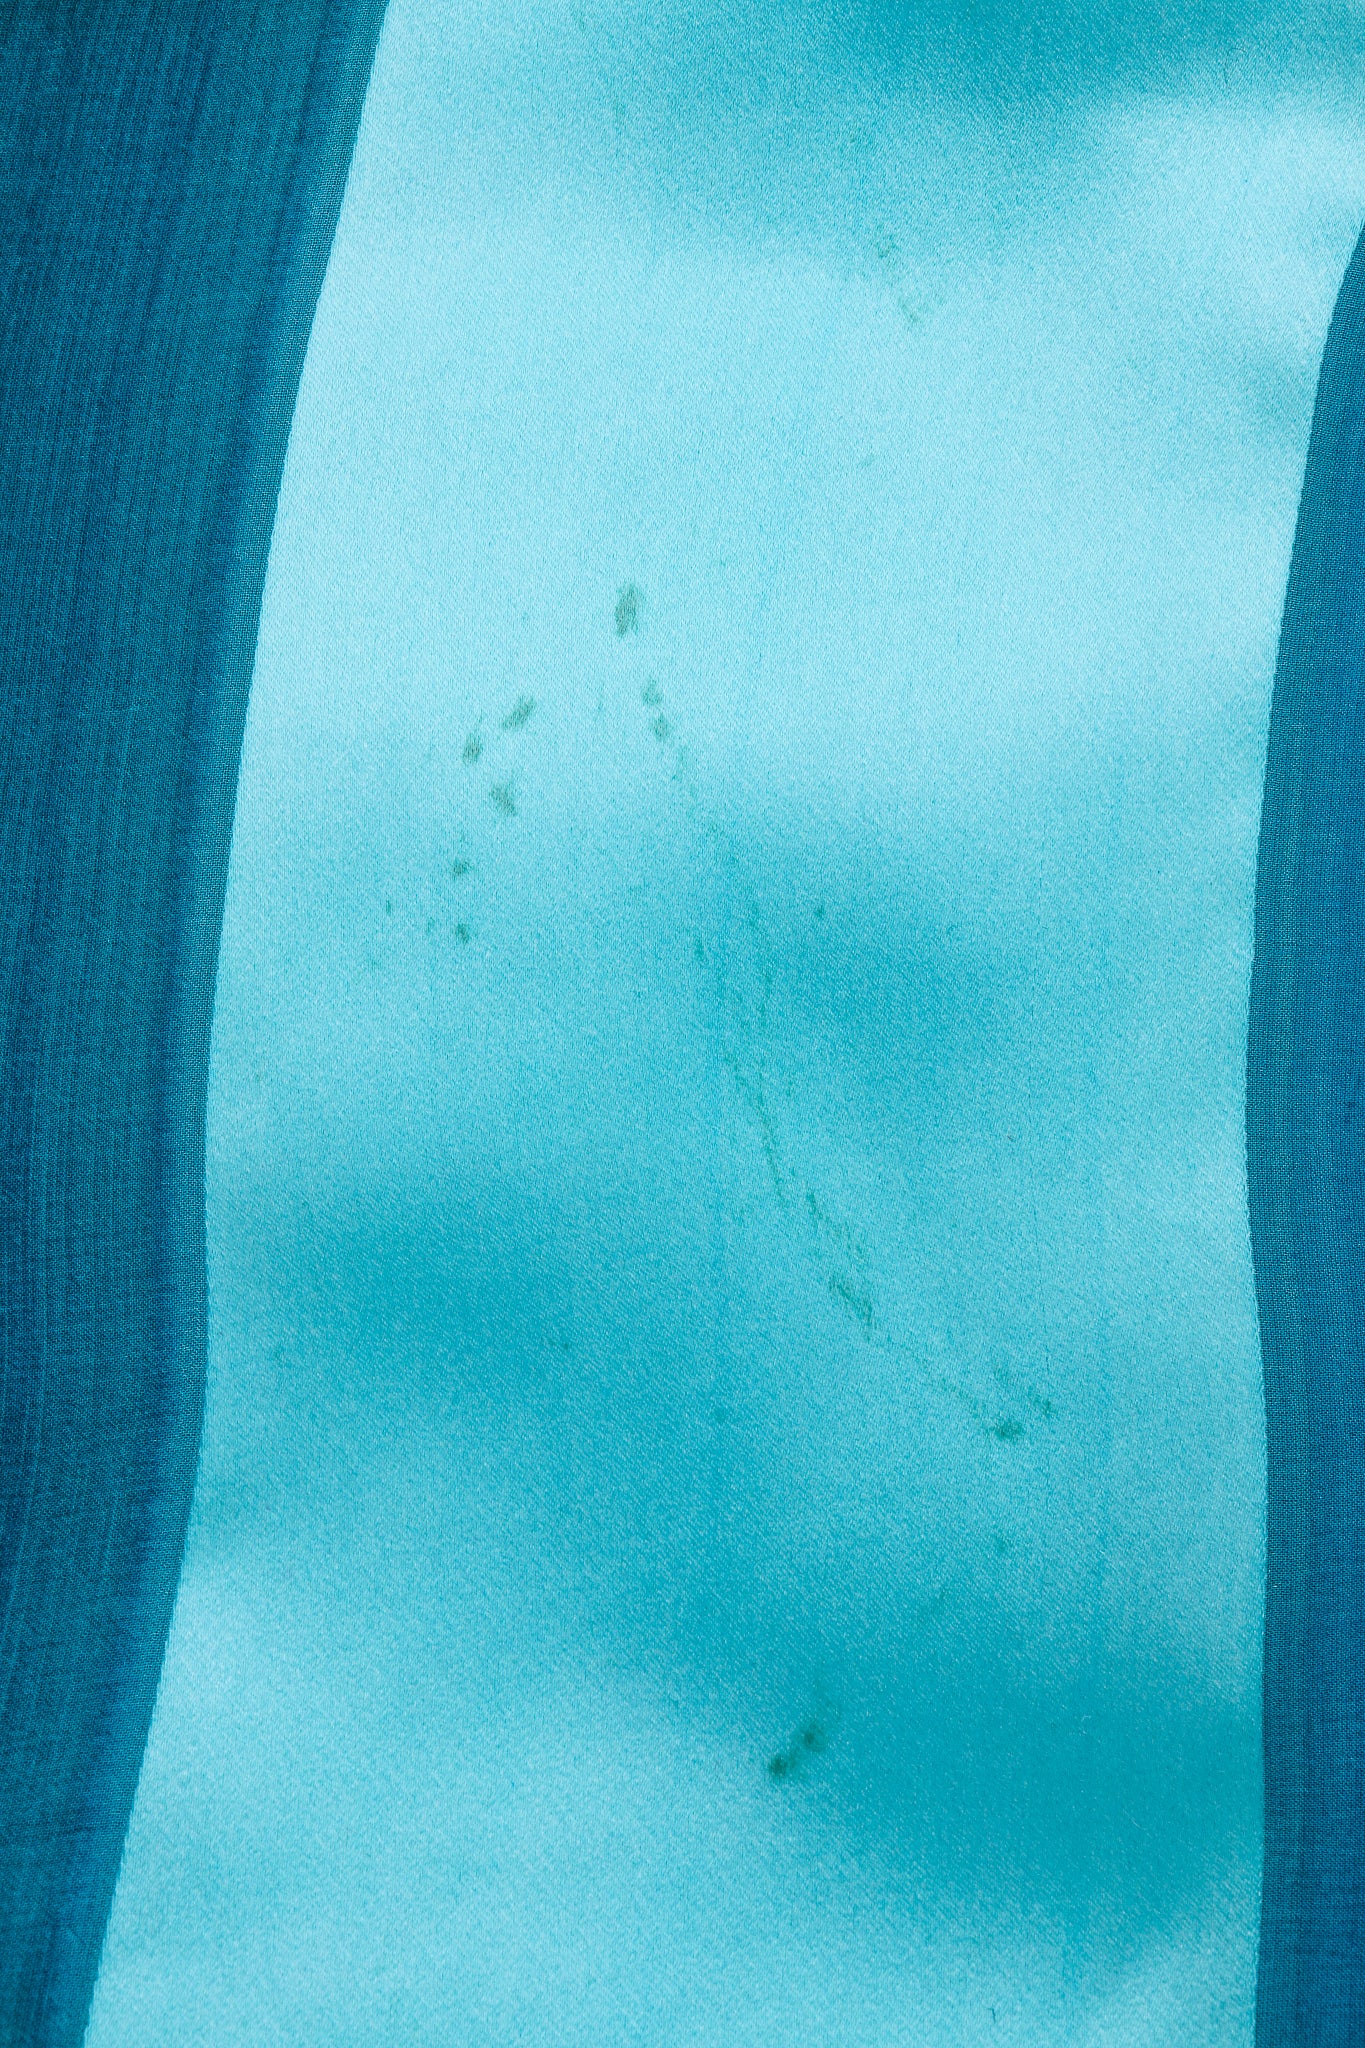 Vintage Richilene Ombre Silk Stripe Paint Chip Dress stains in aqua section near hem